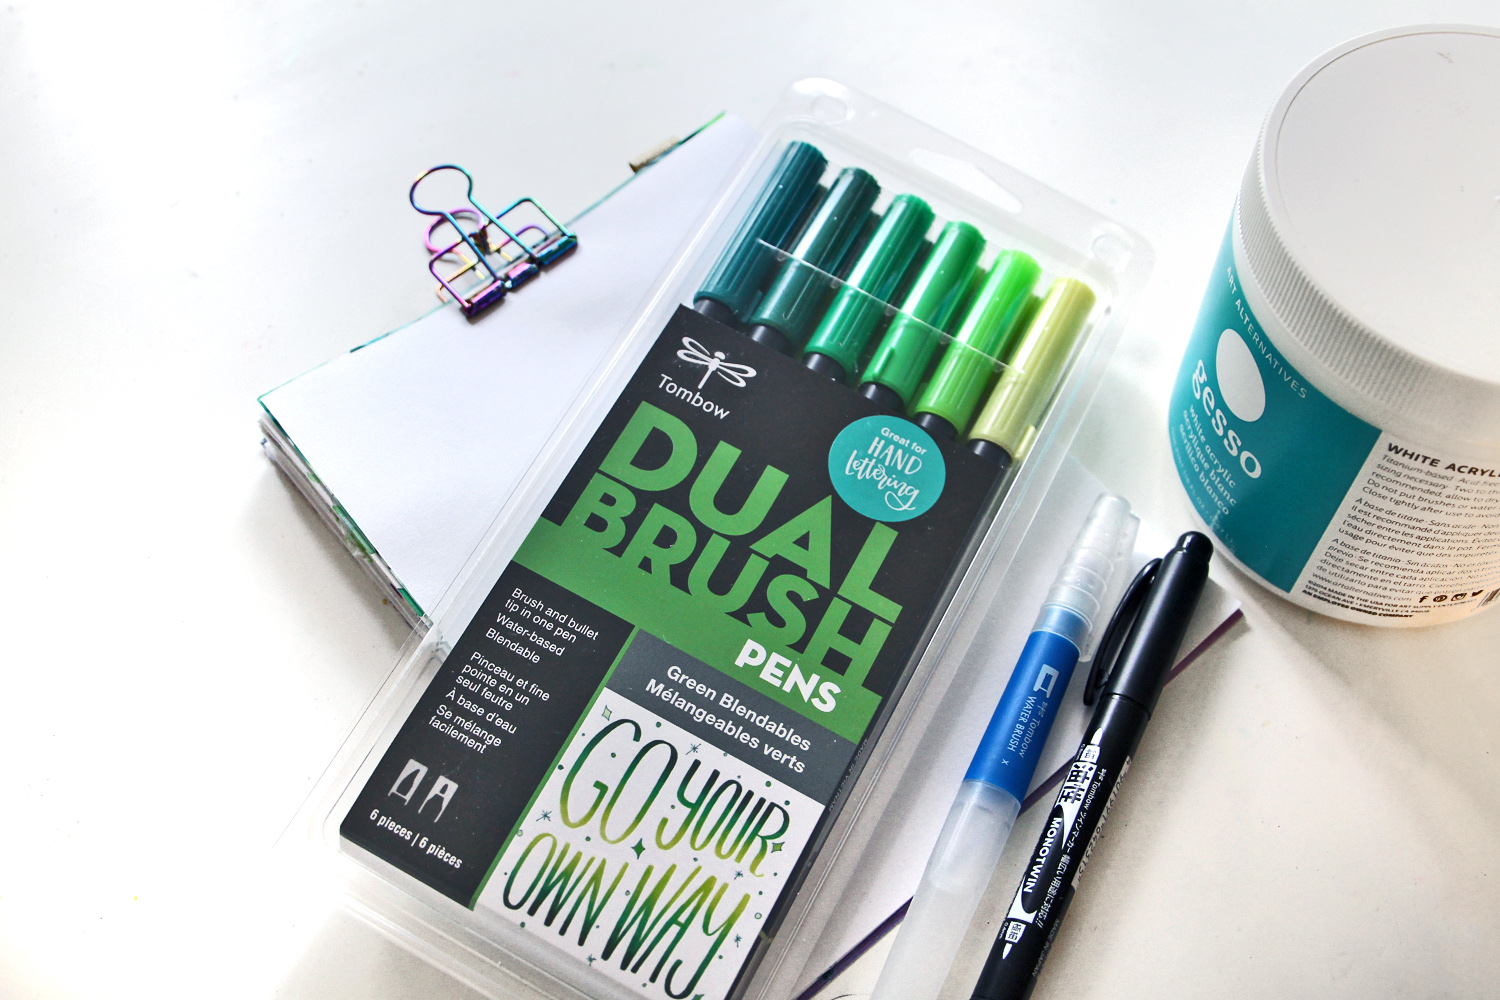 Tombow Dual Brush Pen 10-Pack Set - Tropical